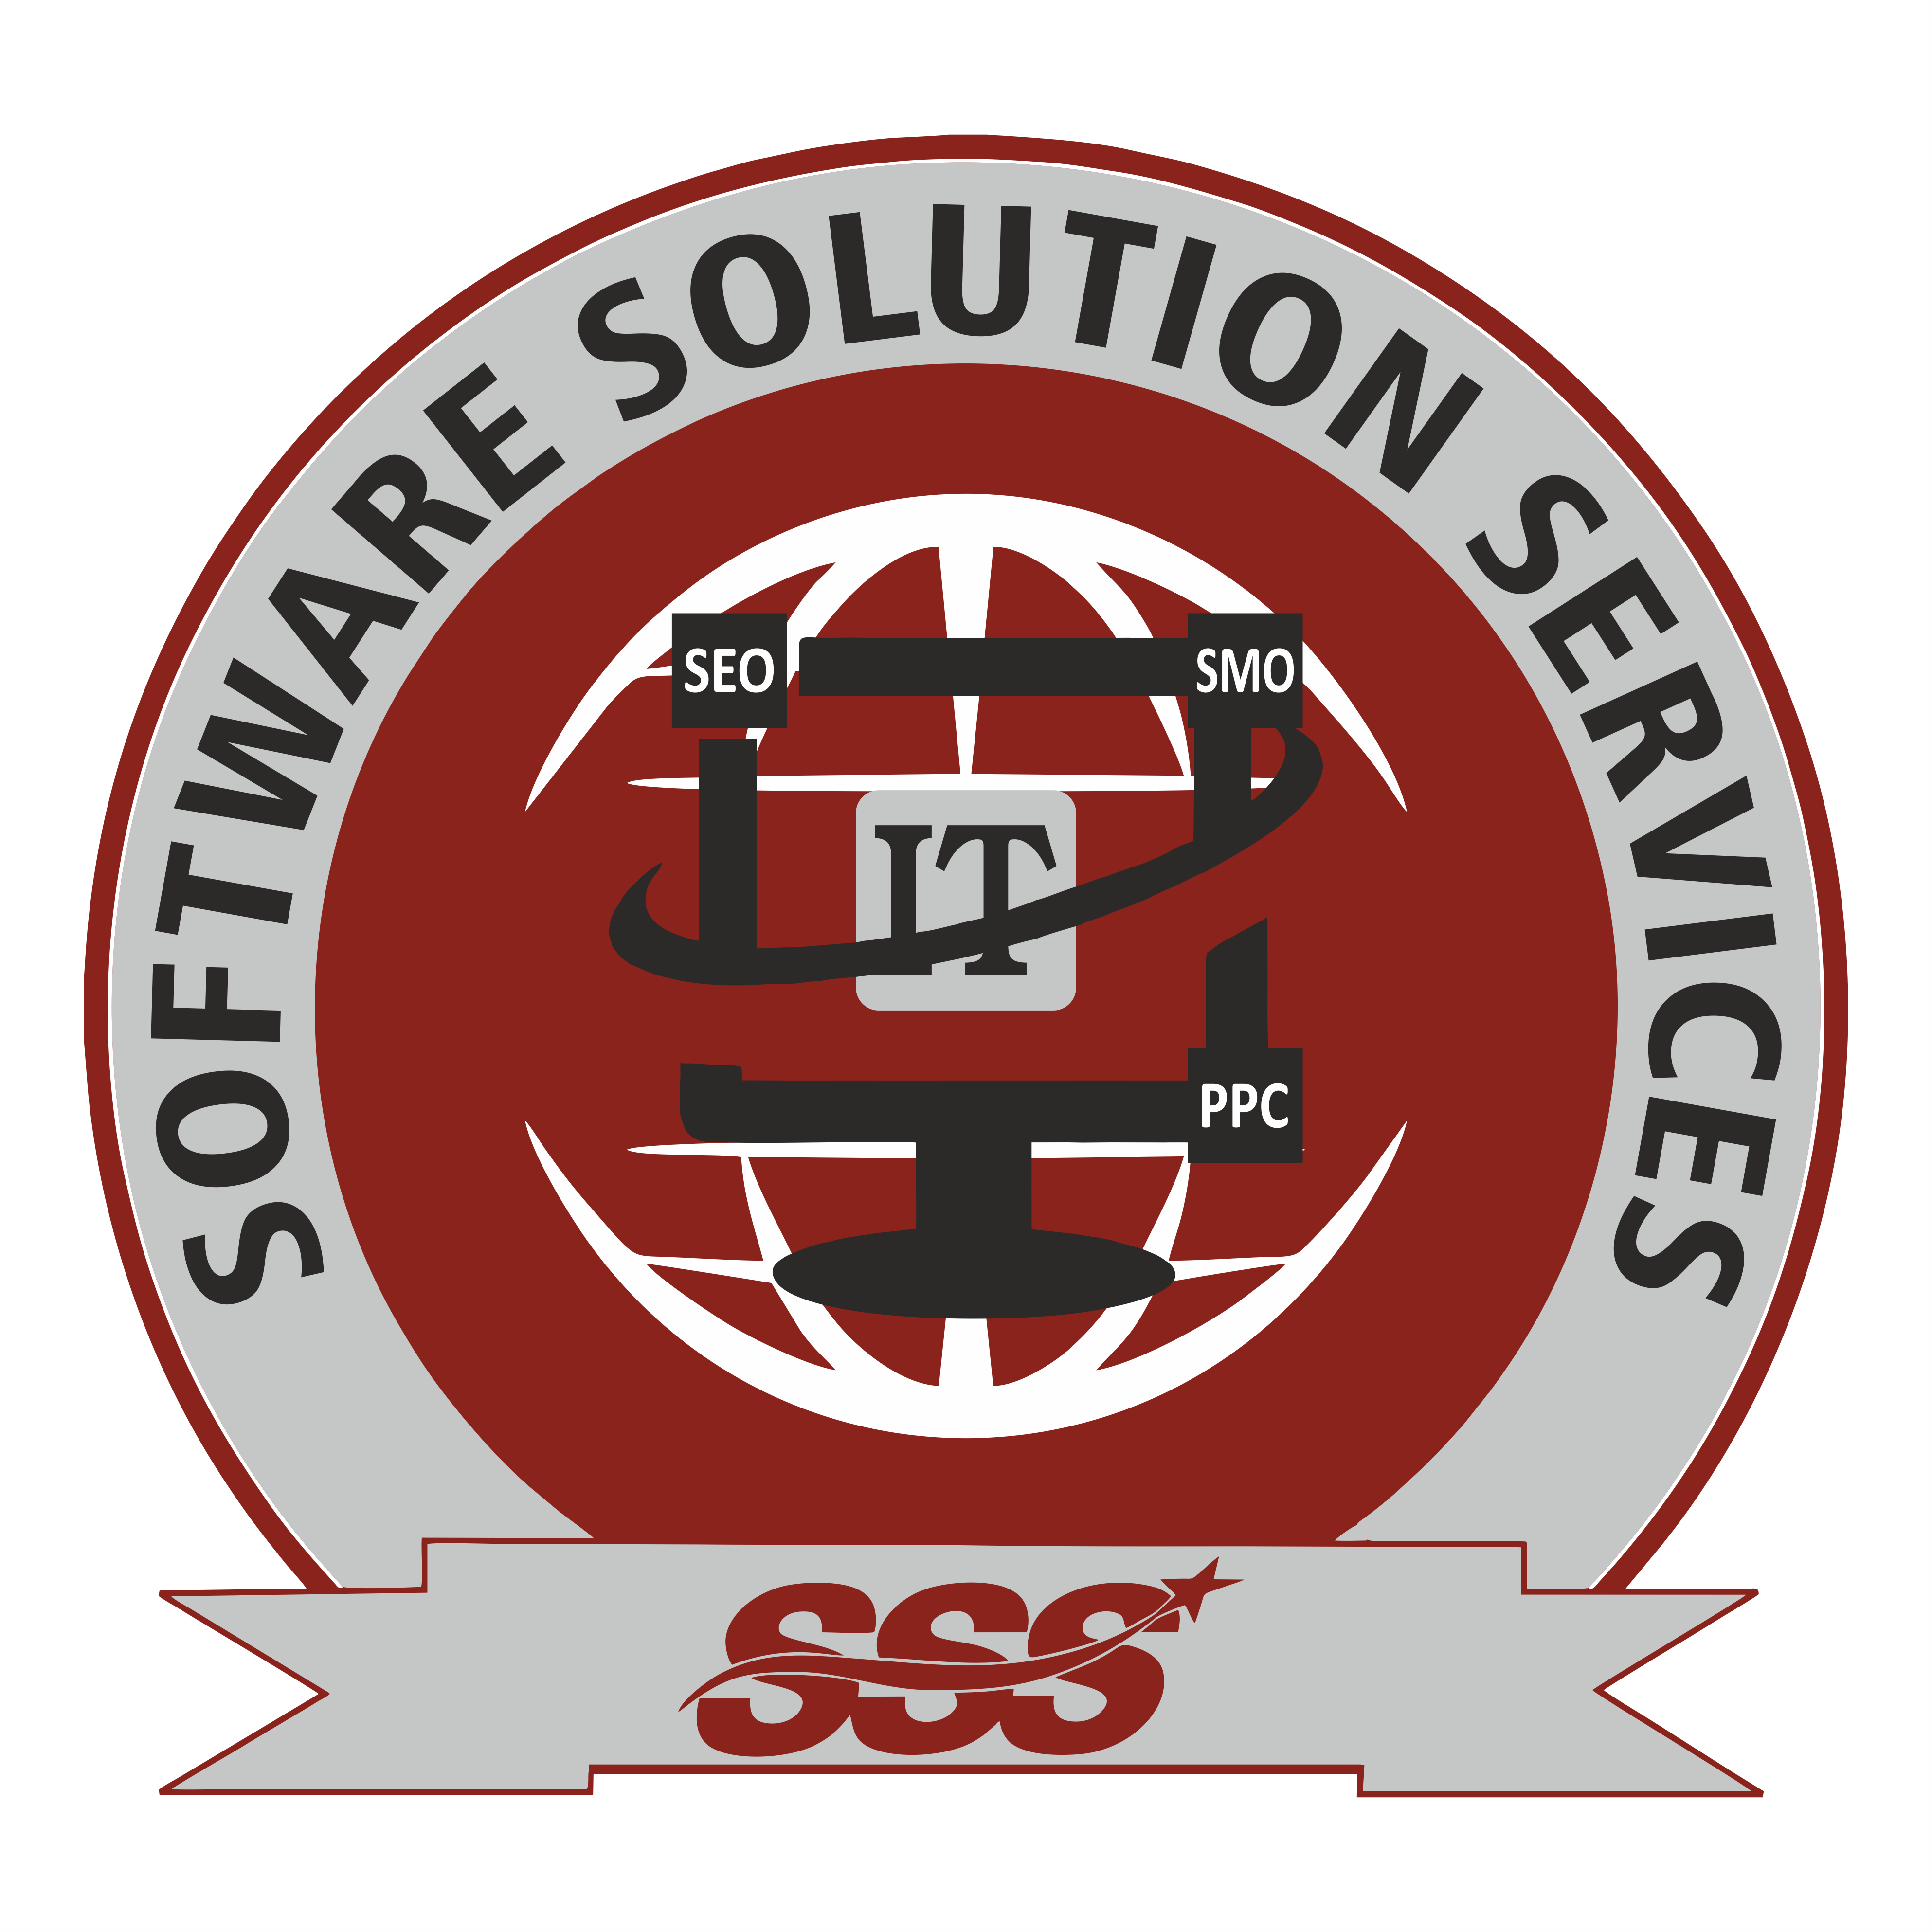 (c) Softwaresolutionservice.com